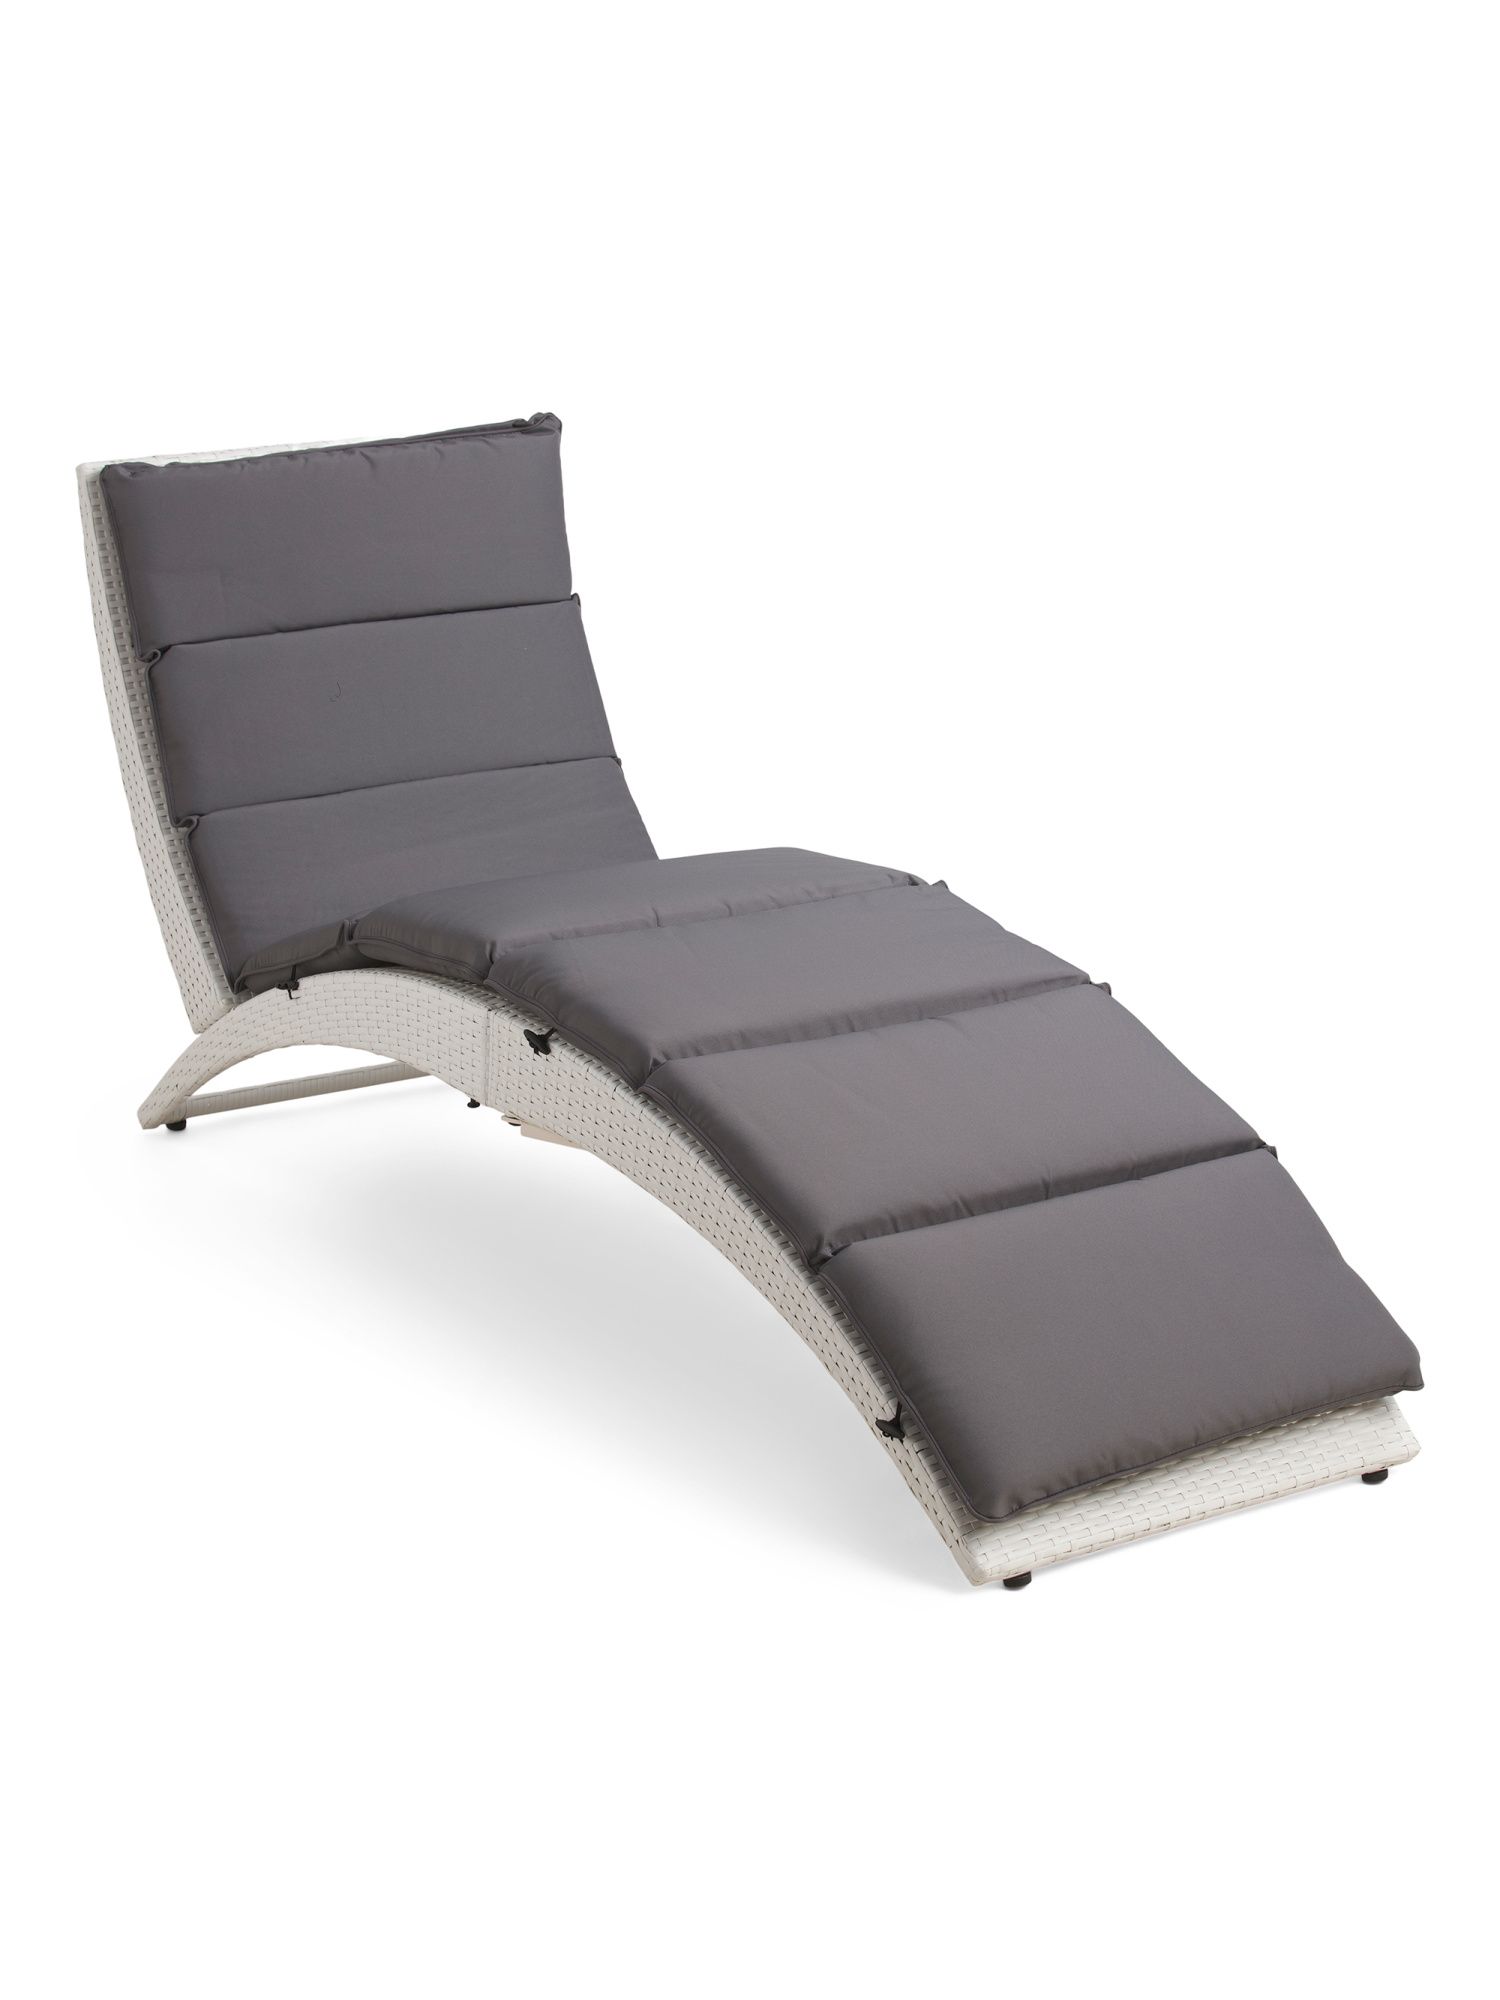 Outdoor Lounge Chair With Cushion | TJ Maxx